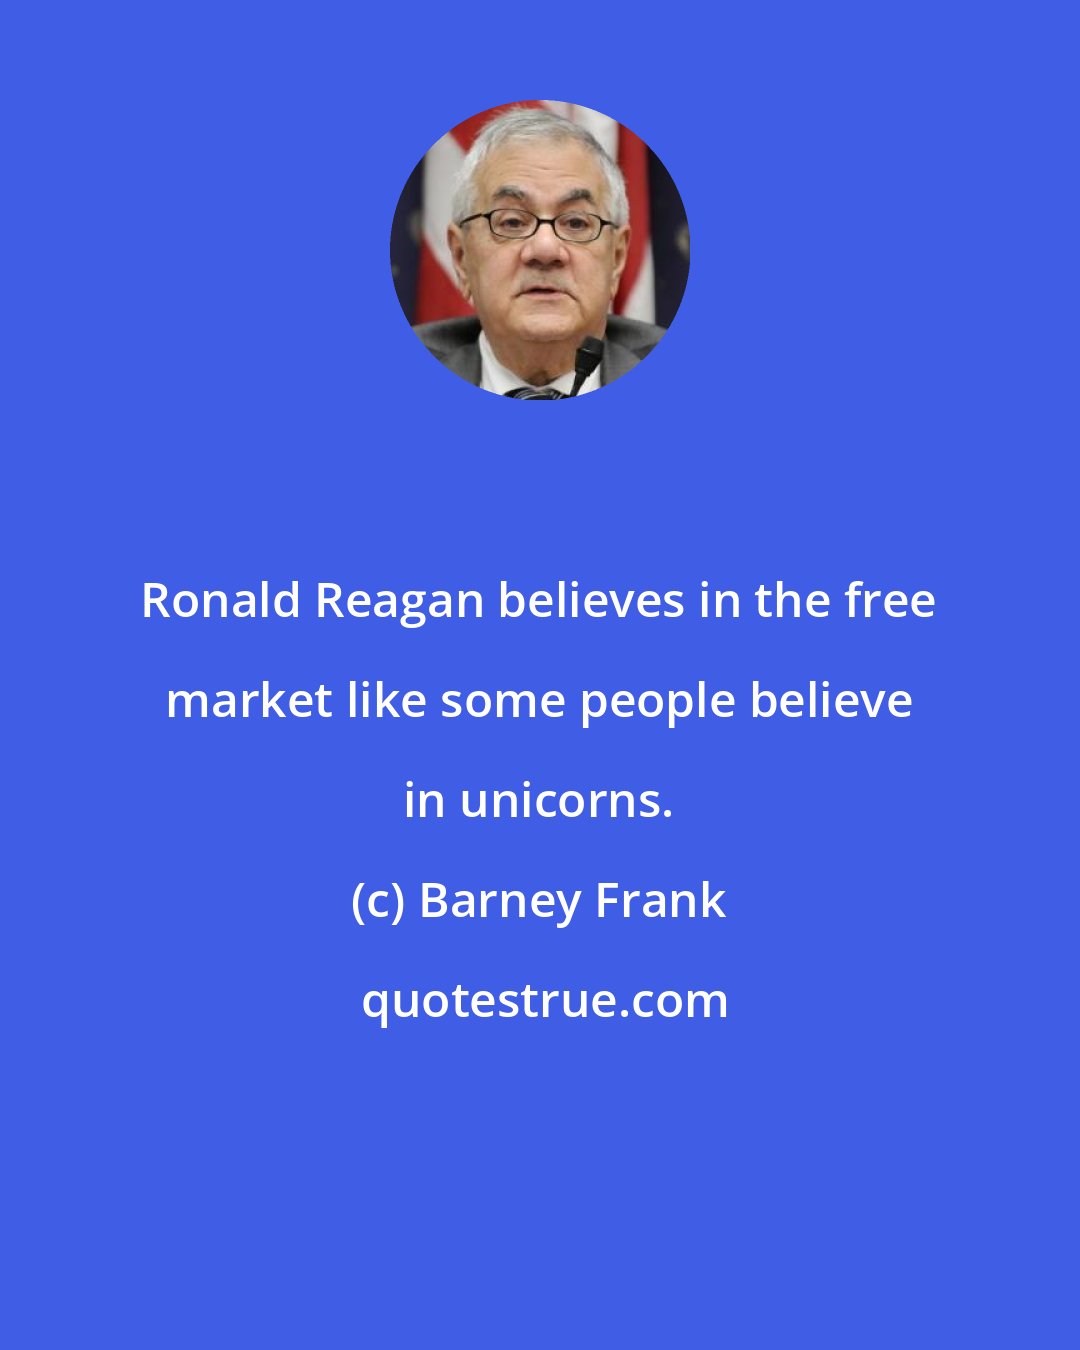 Barney Frank: Ronald Reagan believes in the free market like some people believe in unicorns.